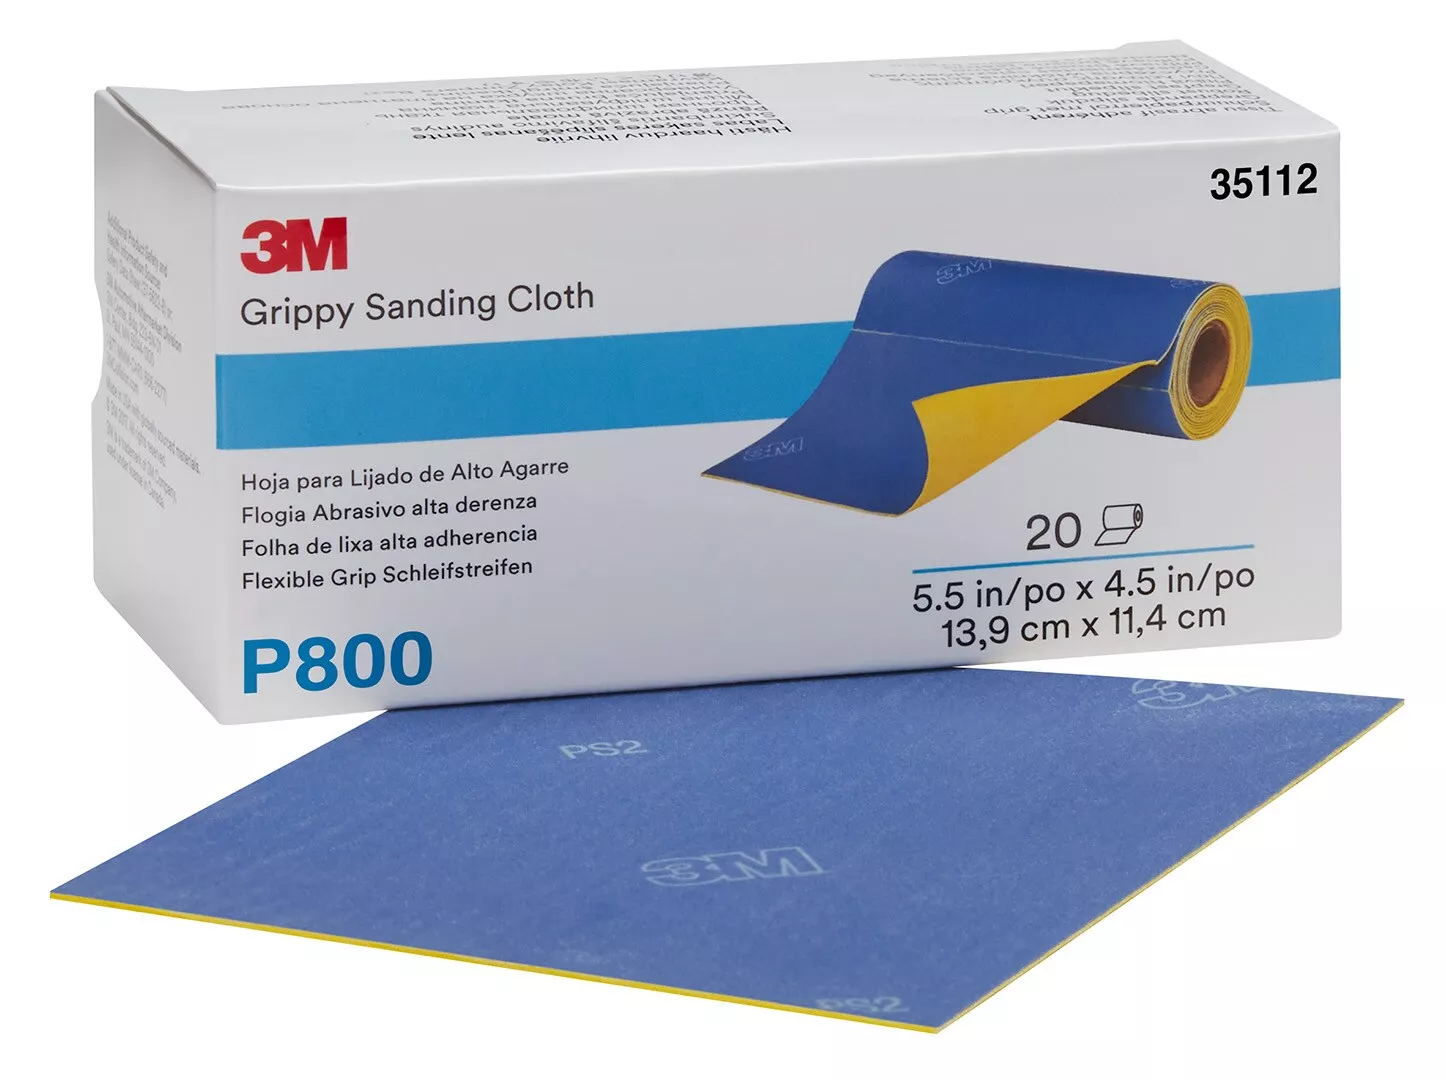 SKU 7100142850 | 3M™ Grippy Sanding Cloth 35112